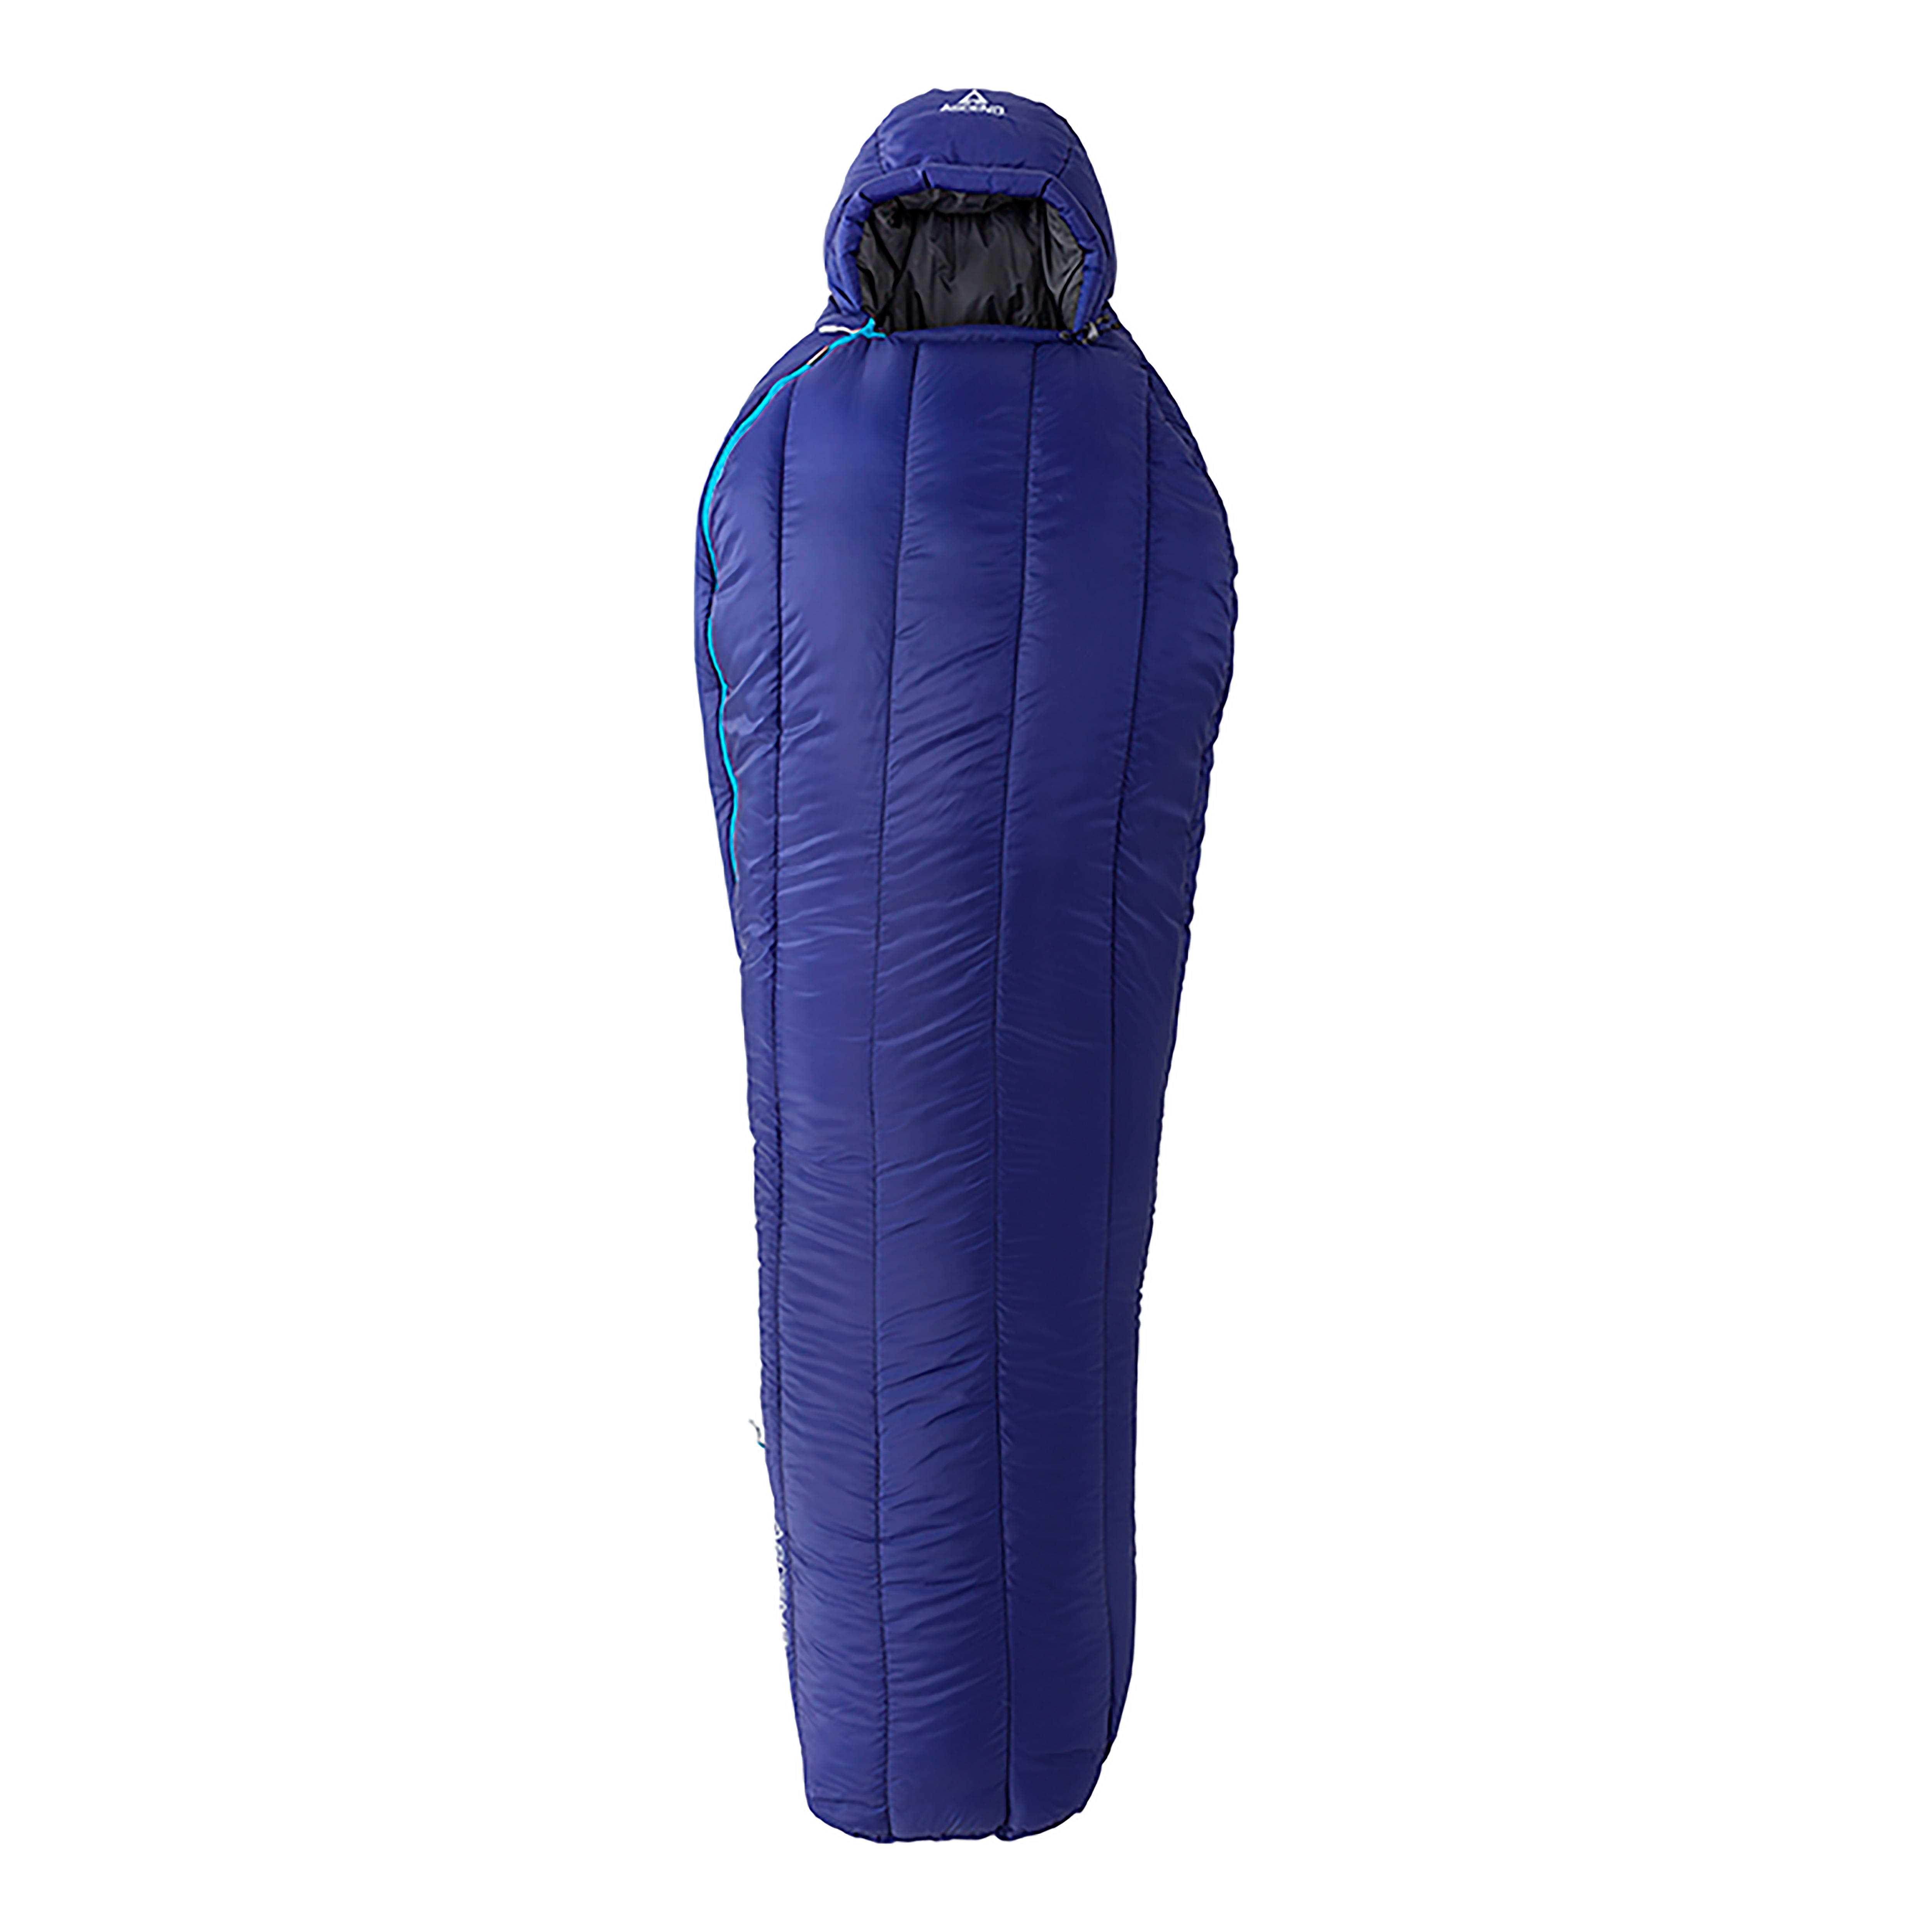 Ascend® Hoodoo -7°C Mummy Sleeping Bag - Zipped Up View